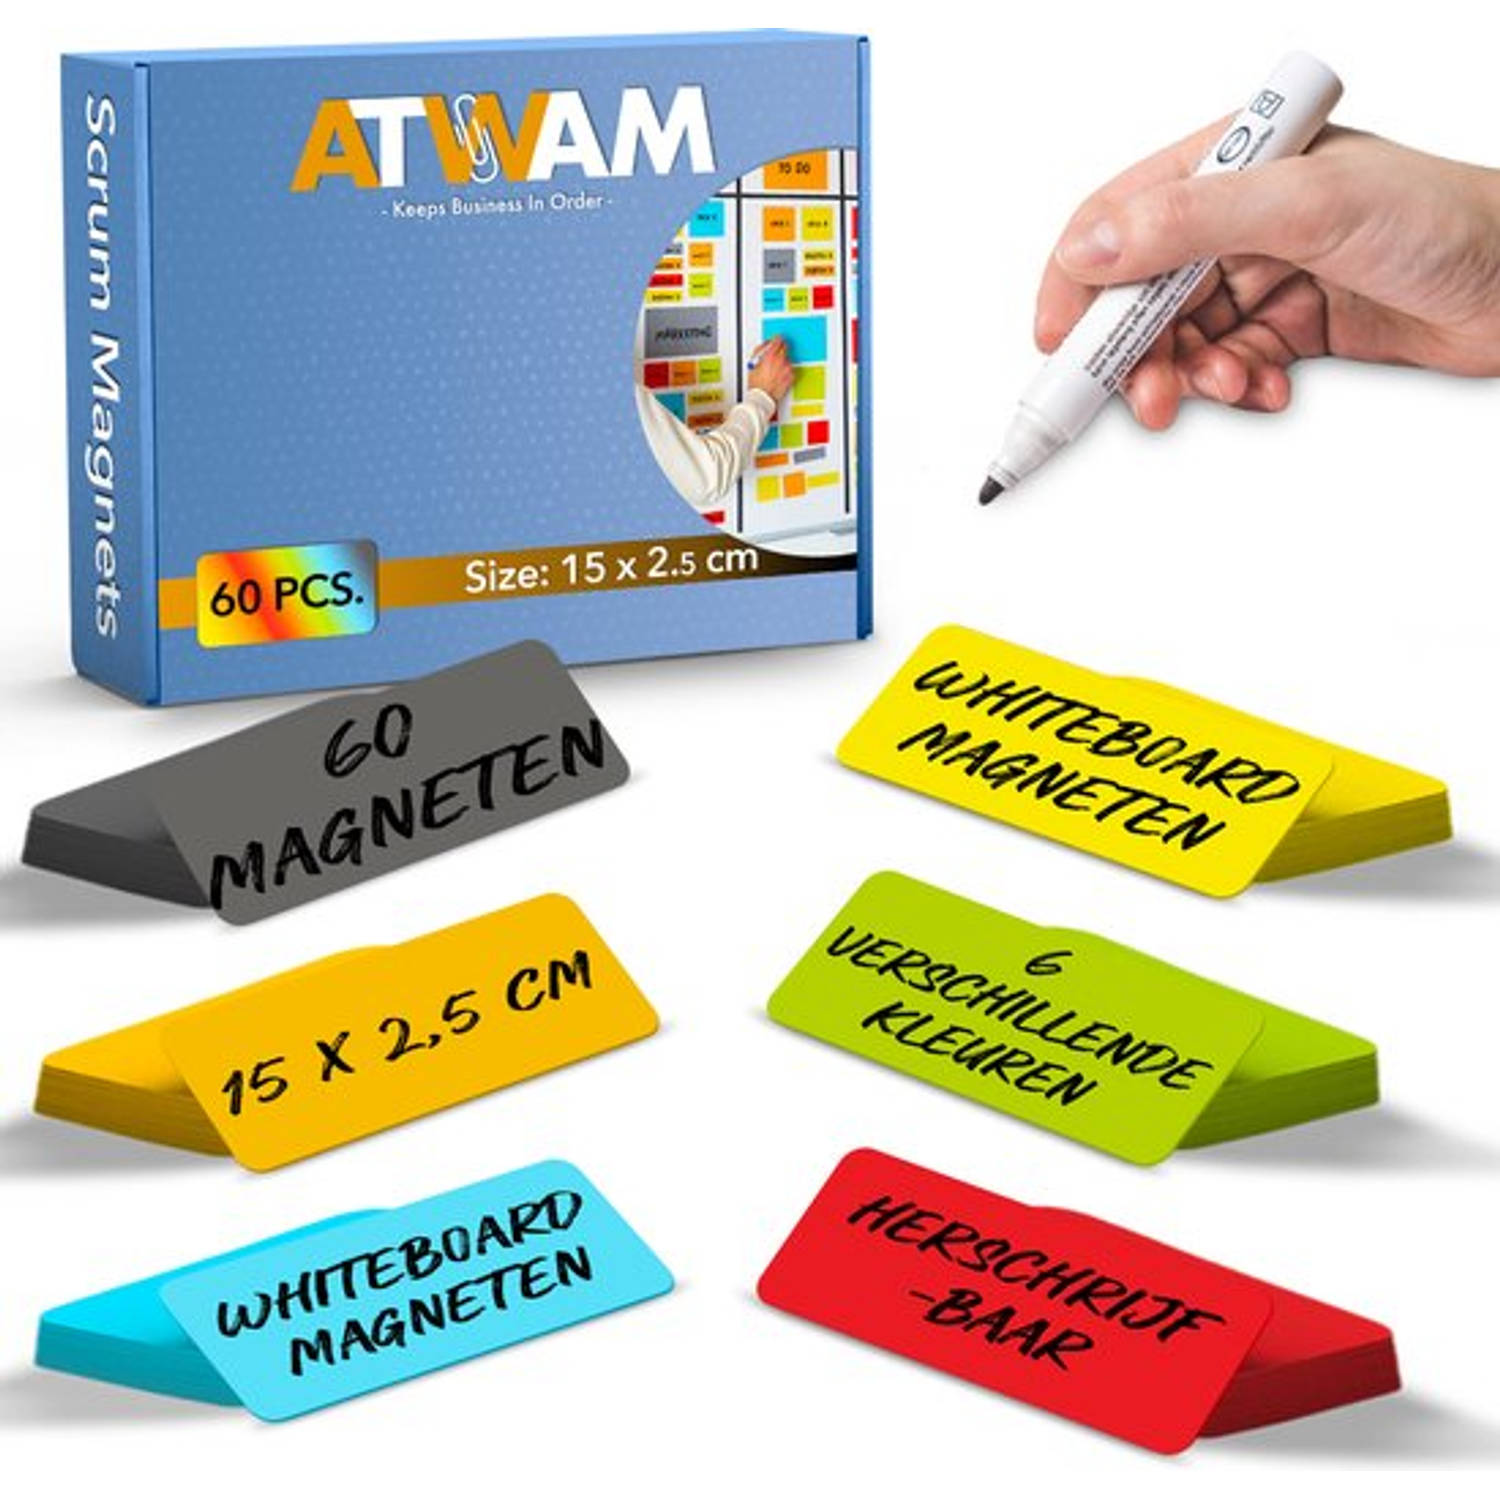 ATWAM Scrum Magneten 60 stuks Voor Whiteboard, Magneetbord, Memobord 15 cm Breed x 2,5 cm Lang 6 Kle